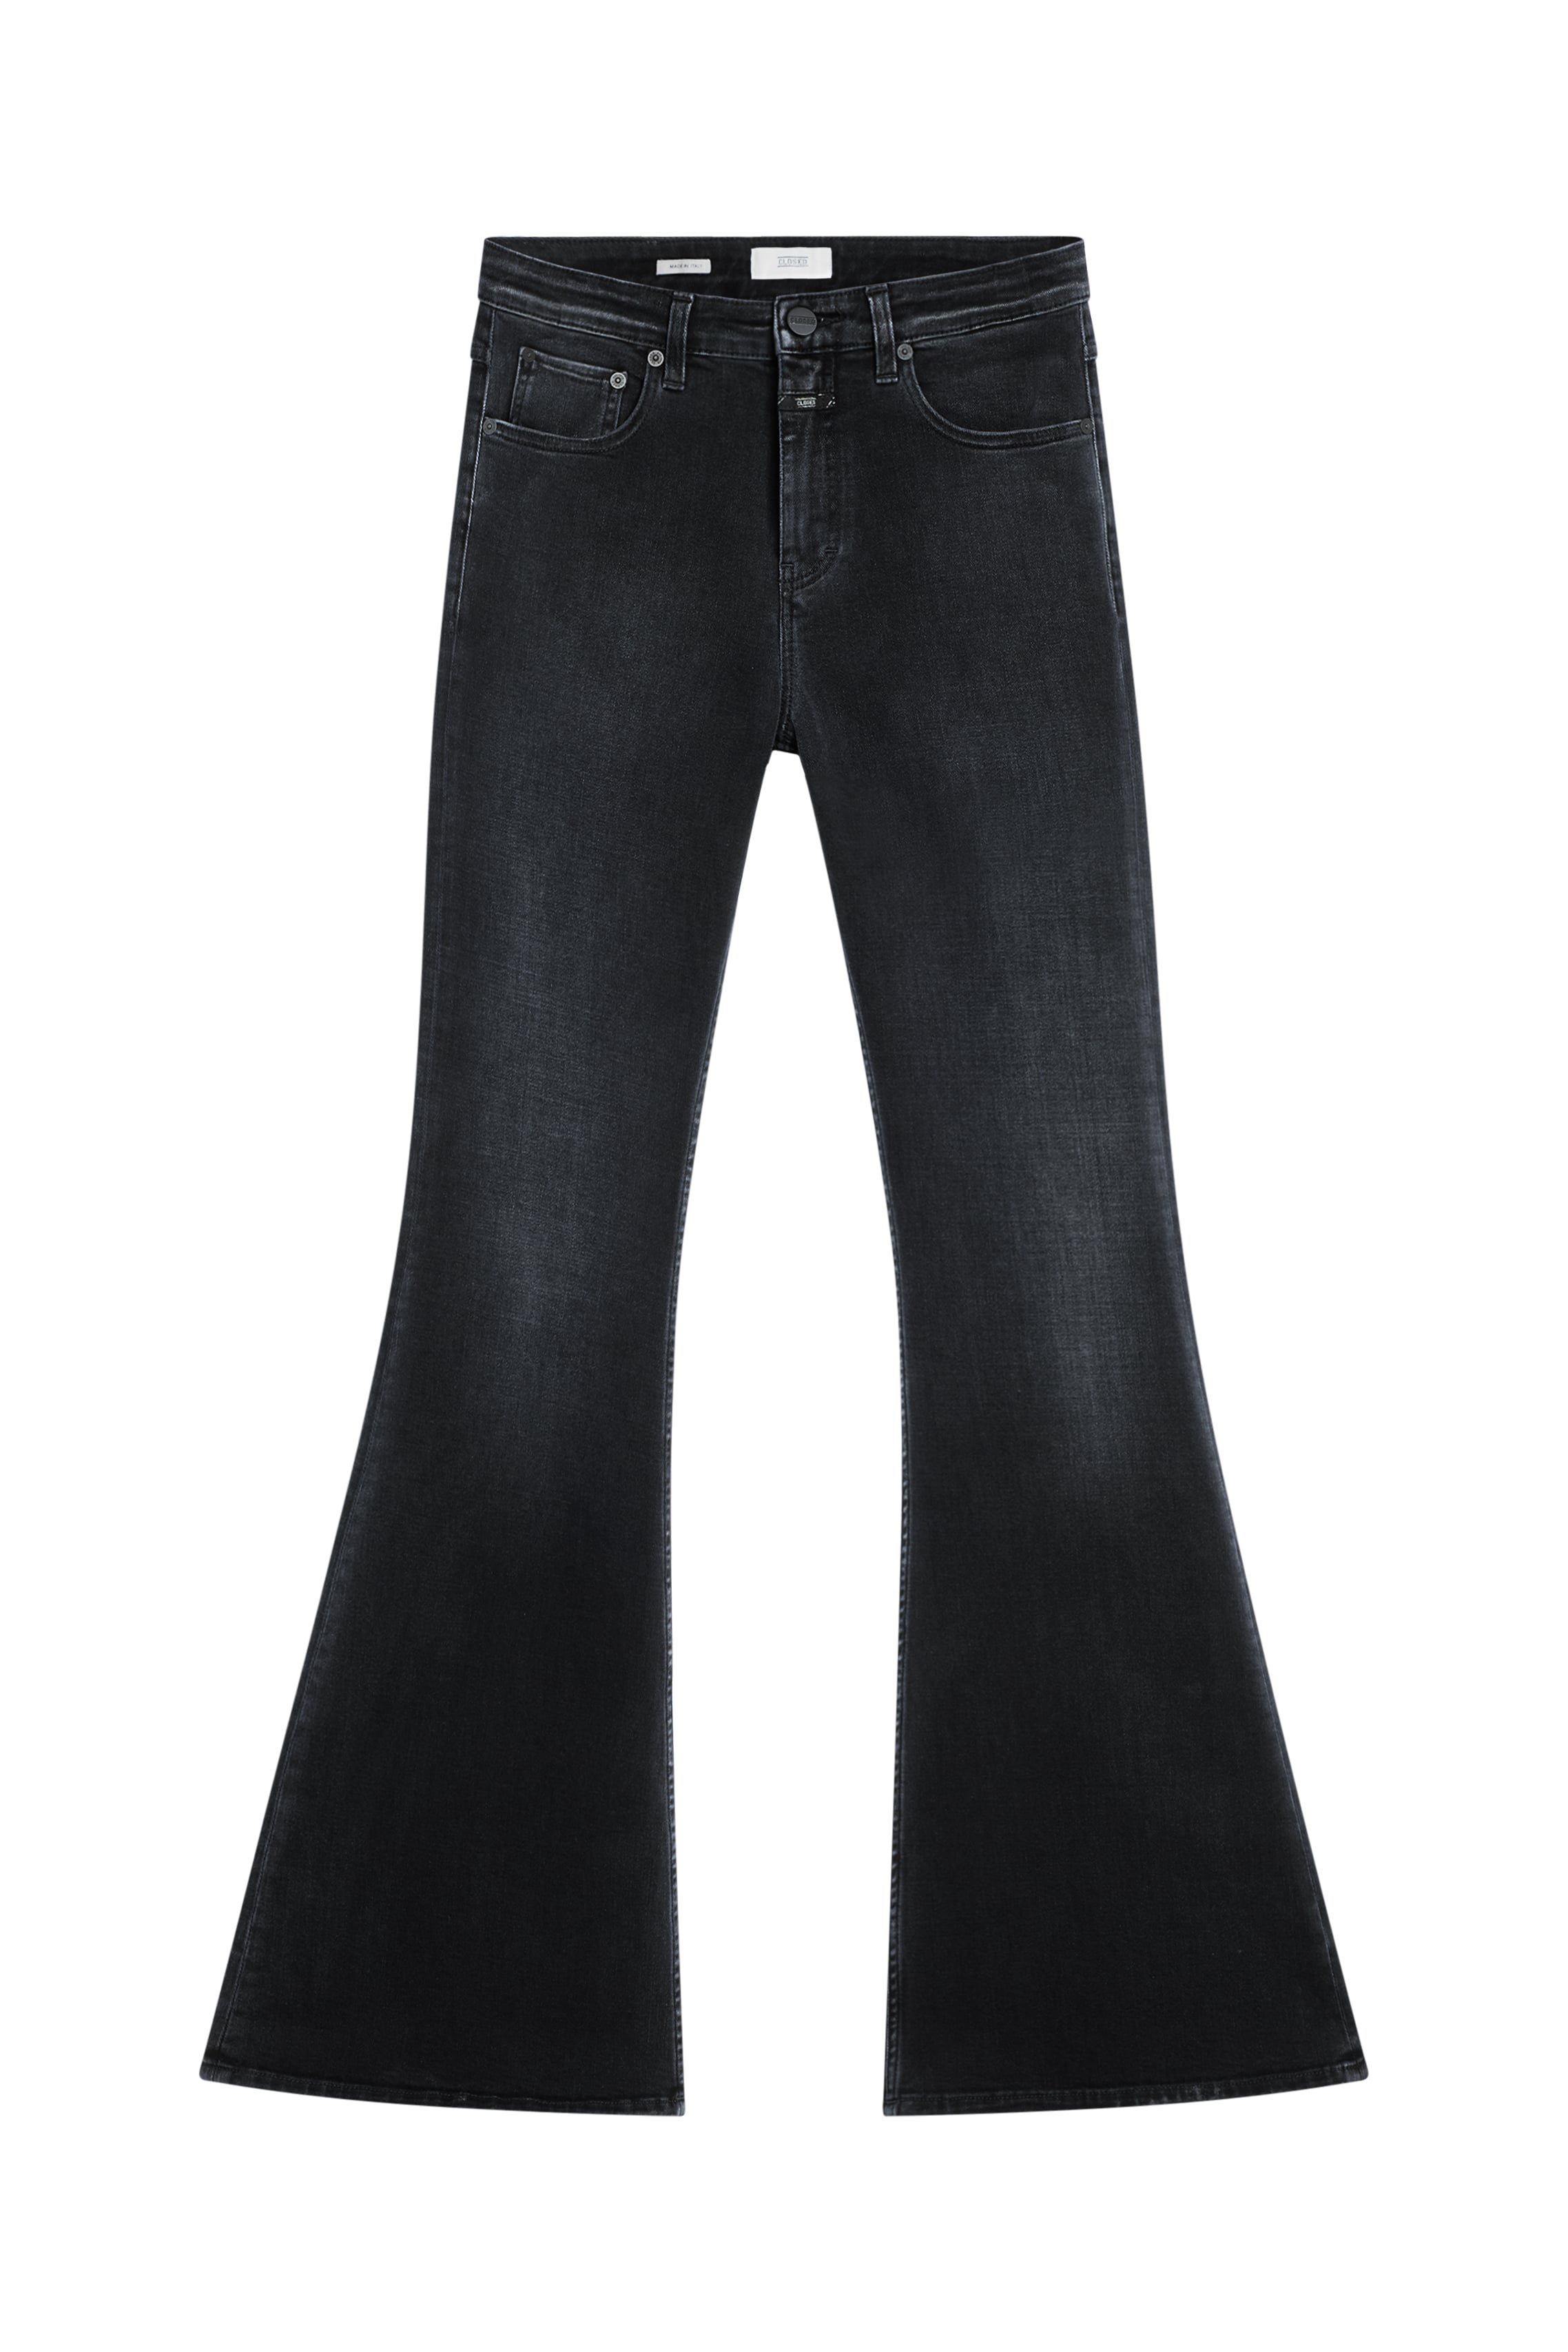 CLOSED-Jeans Flare Grigio Scuro-TRYME Shop